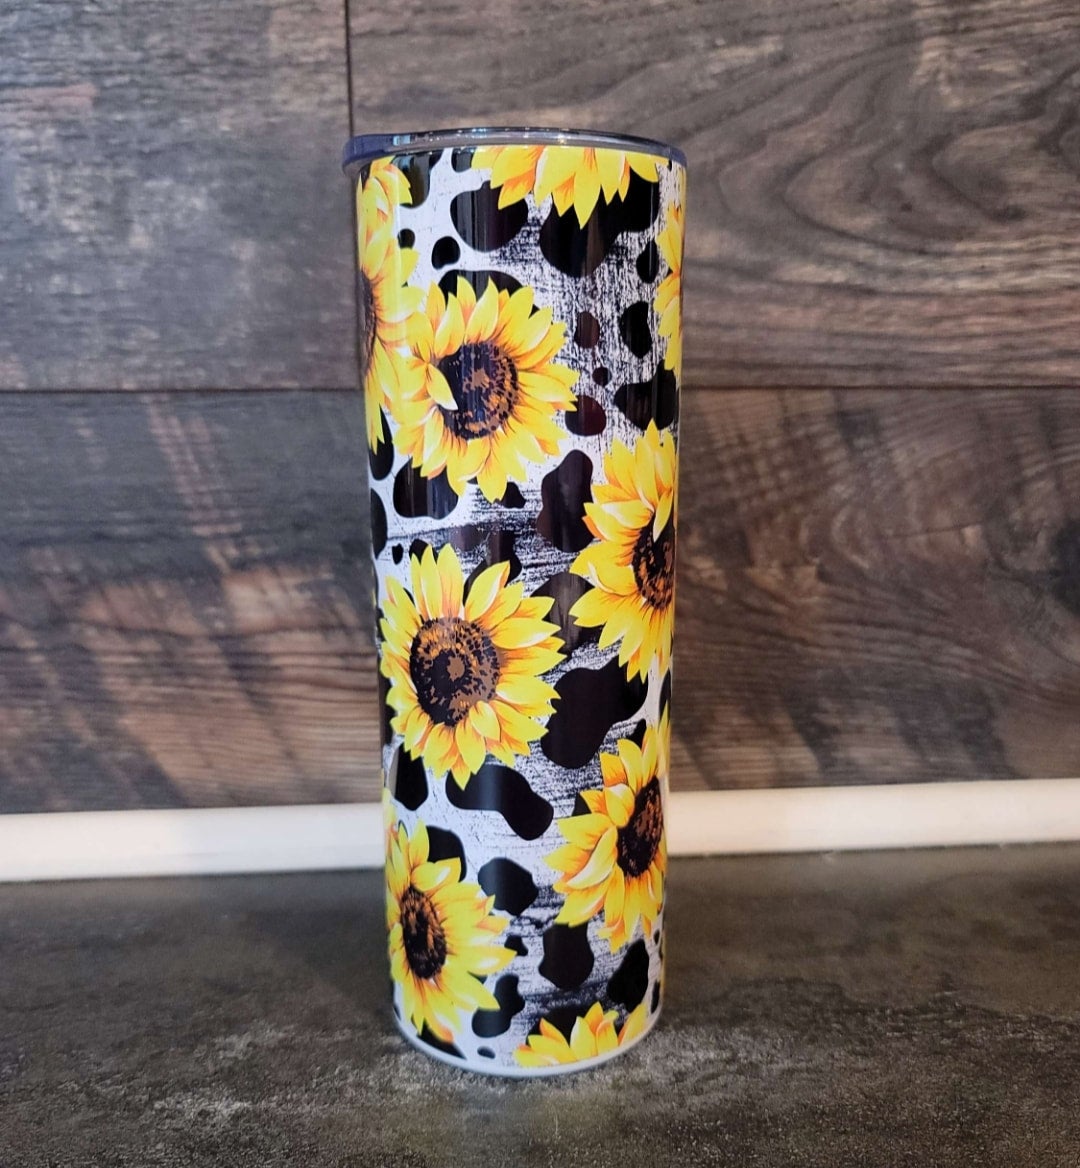 Cow Print Sunflower